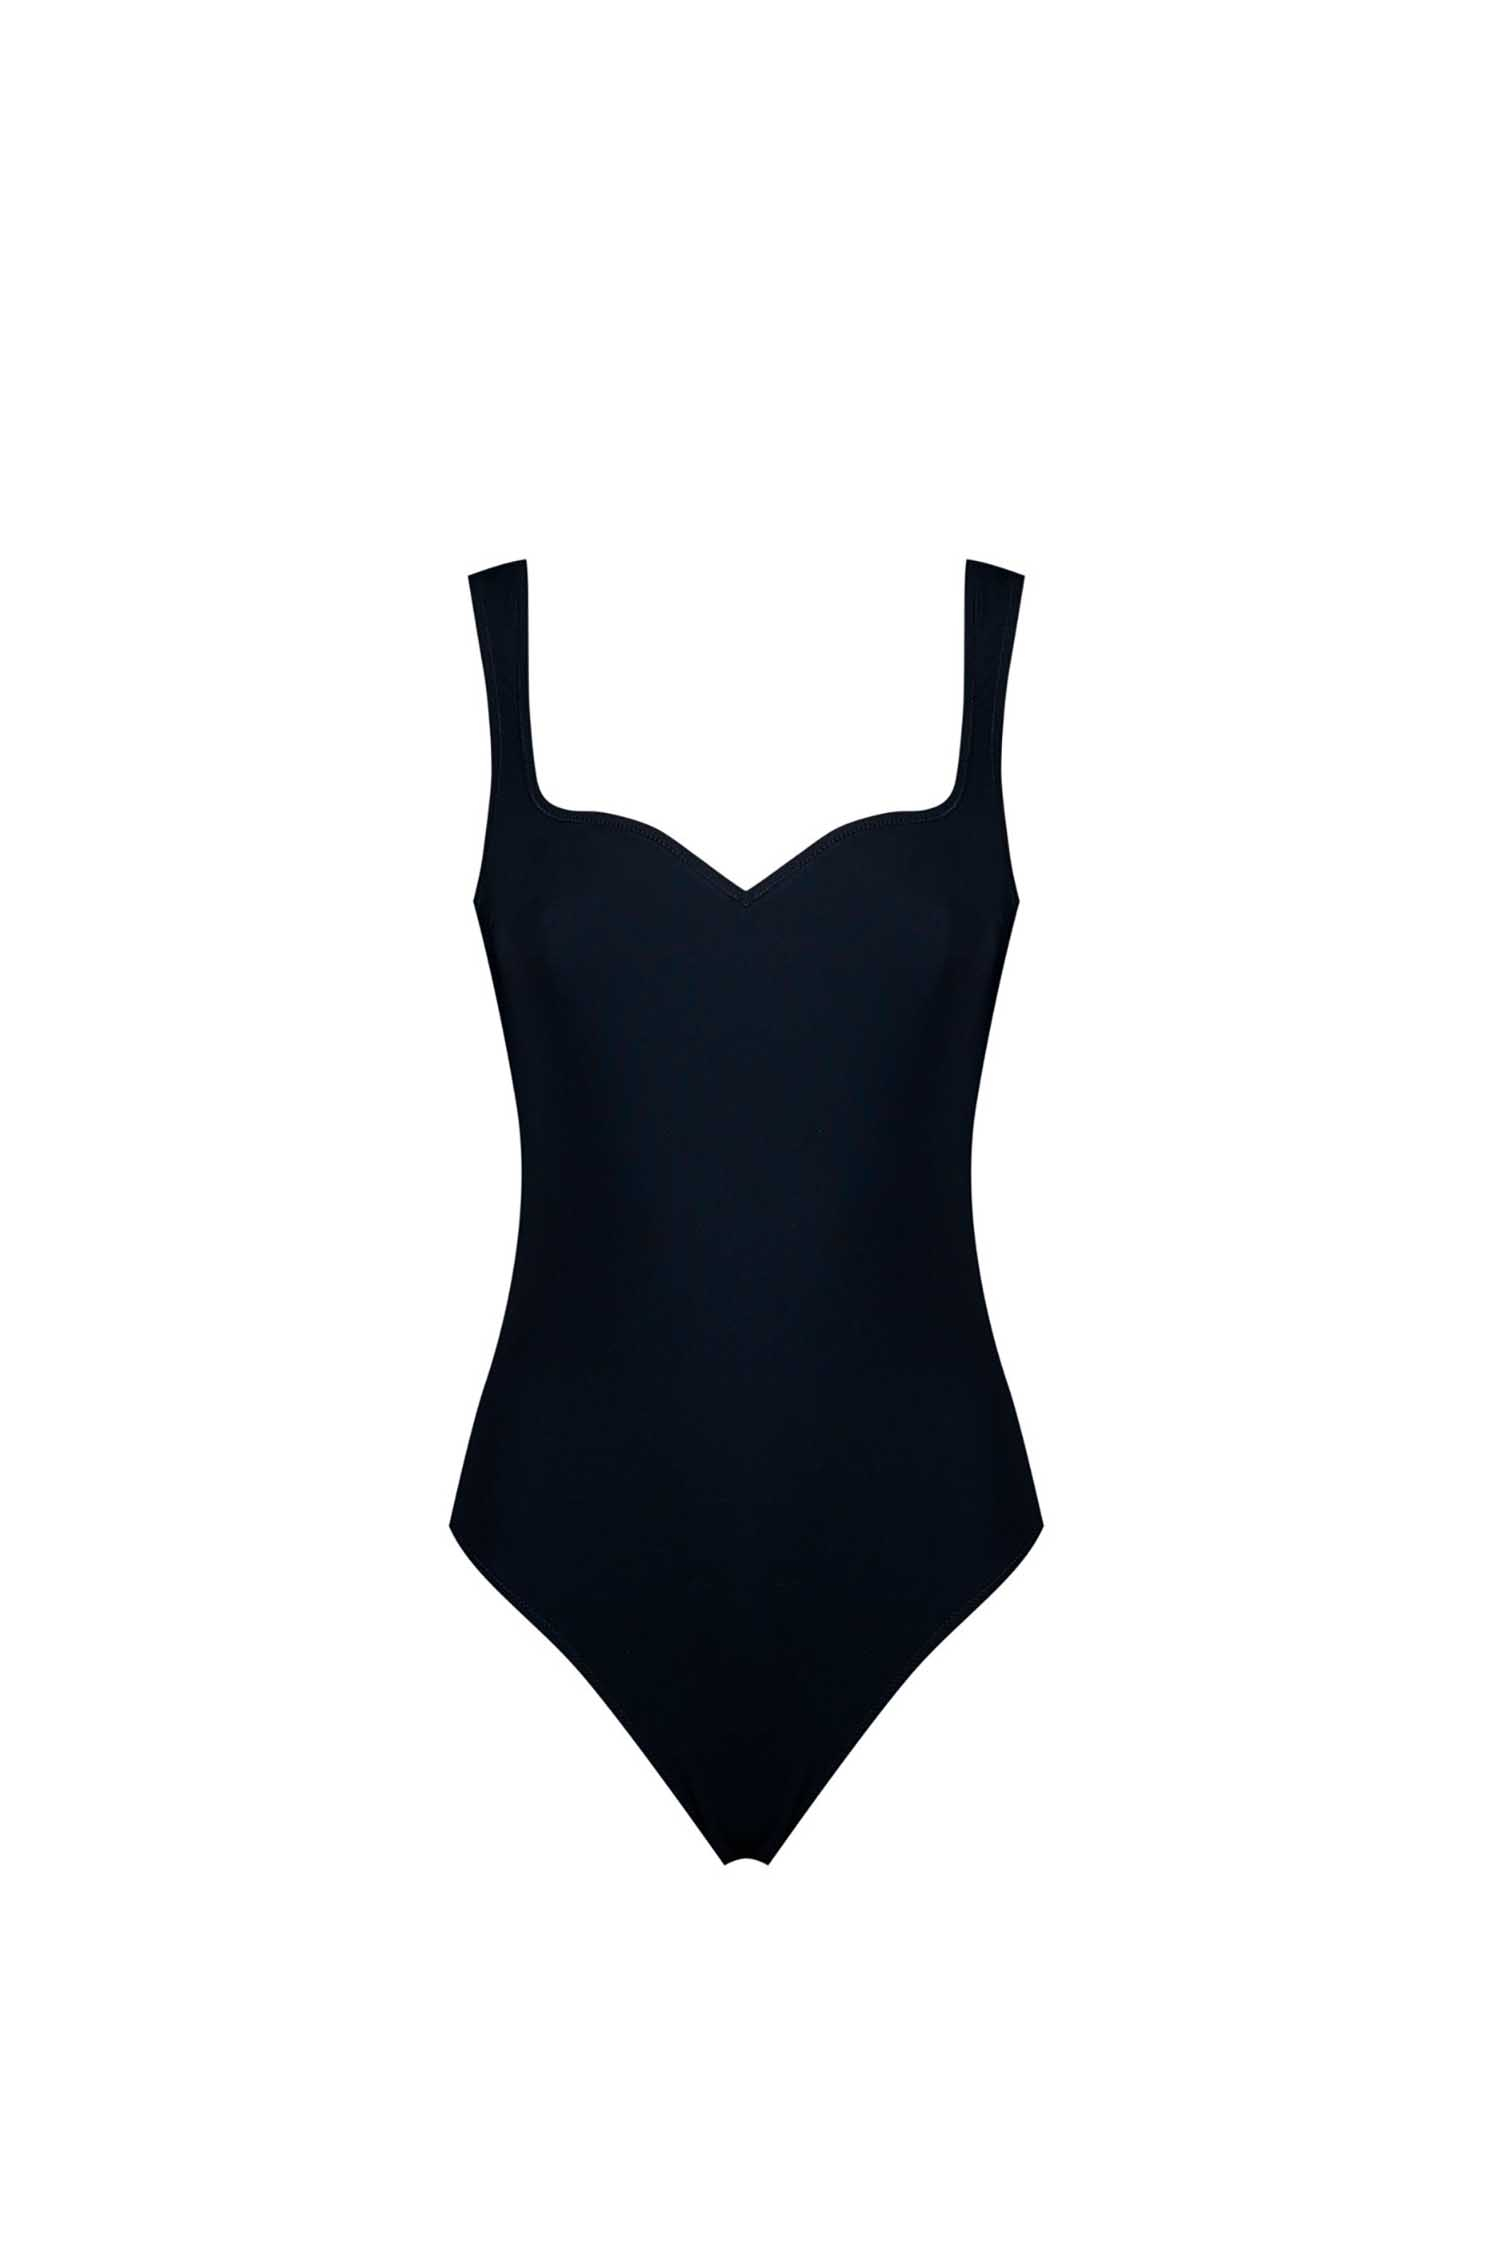 Pale Swimwear - Norma Swimsuit, Black - OOID Store, CHF 165.00